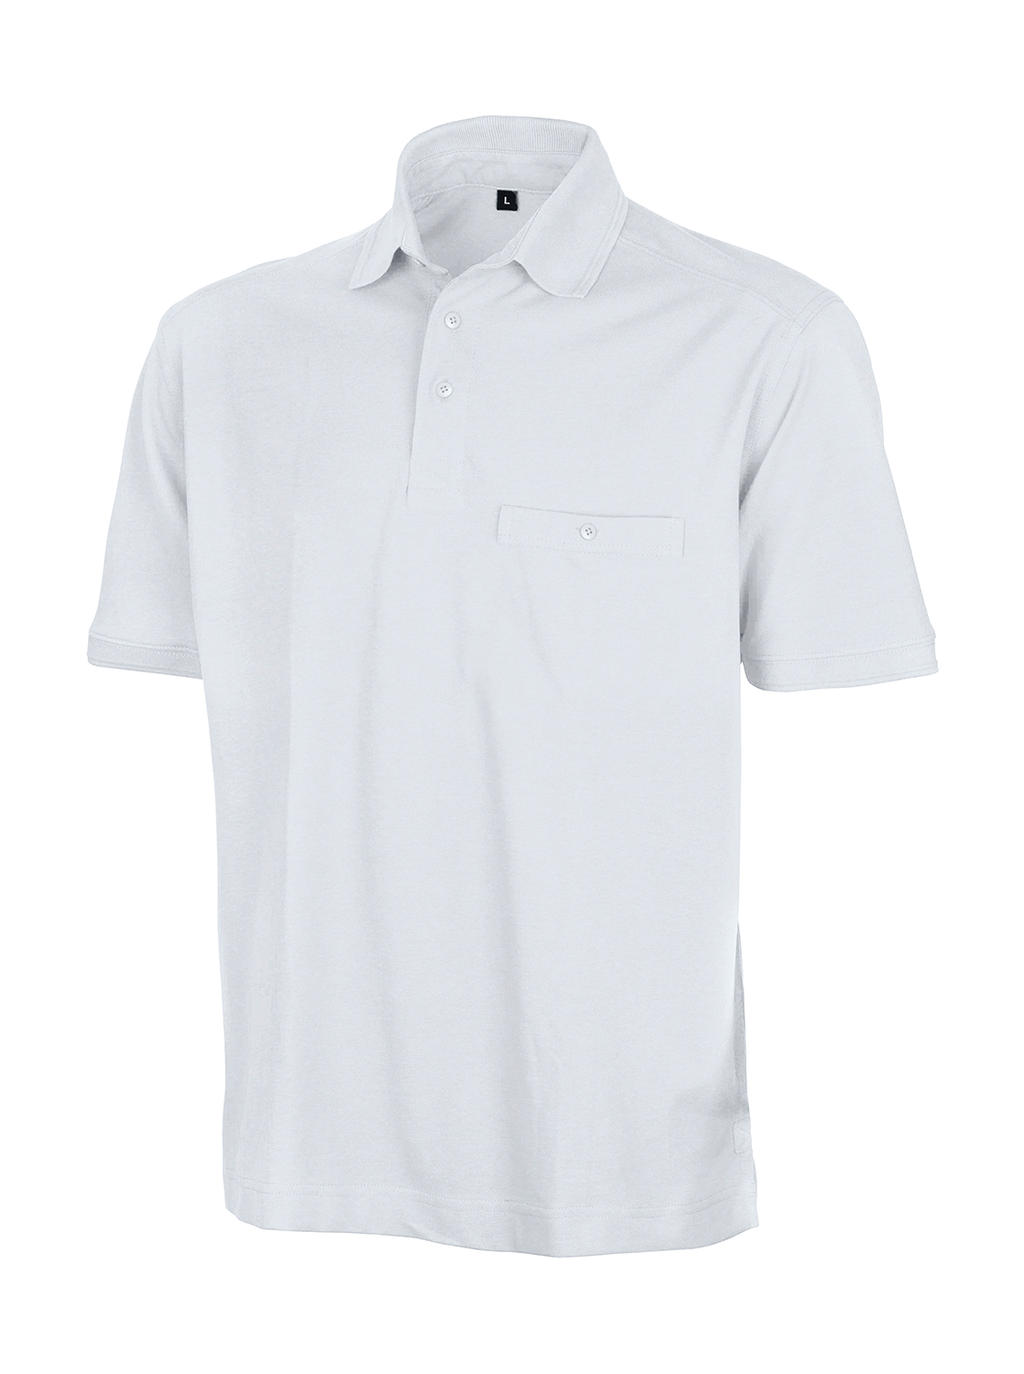  Apex Polo Shirt in Farbe White